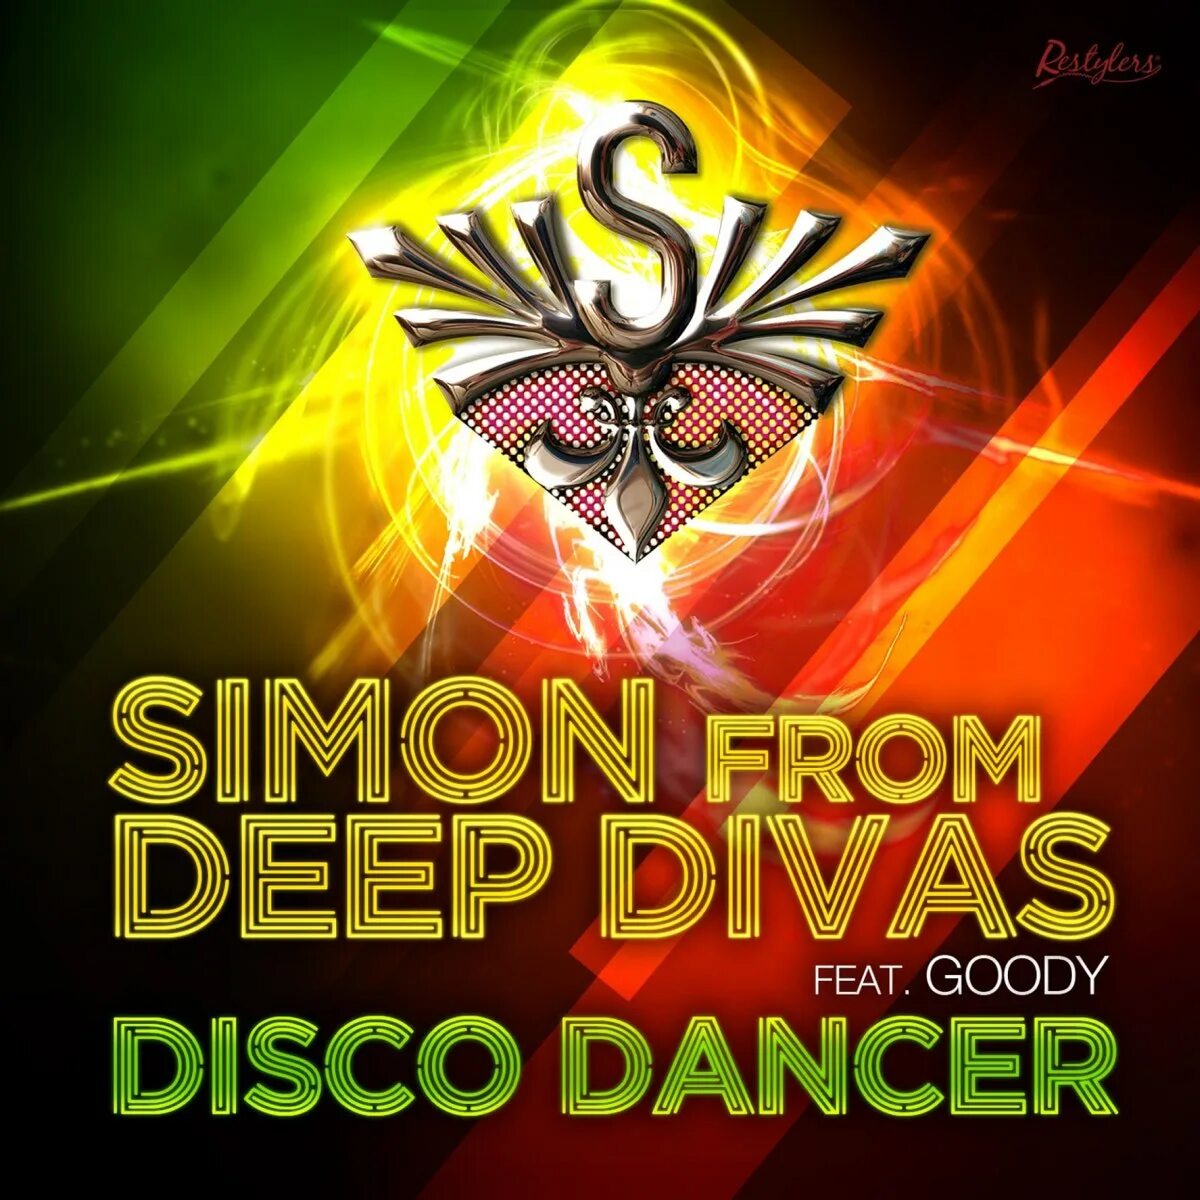 Disco dance remix. Simon Disco Dancer. Диско (feat. Fznd). Deep Divas. Disco Dancer Hindi.